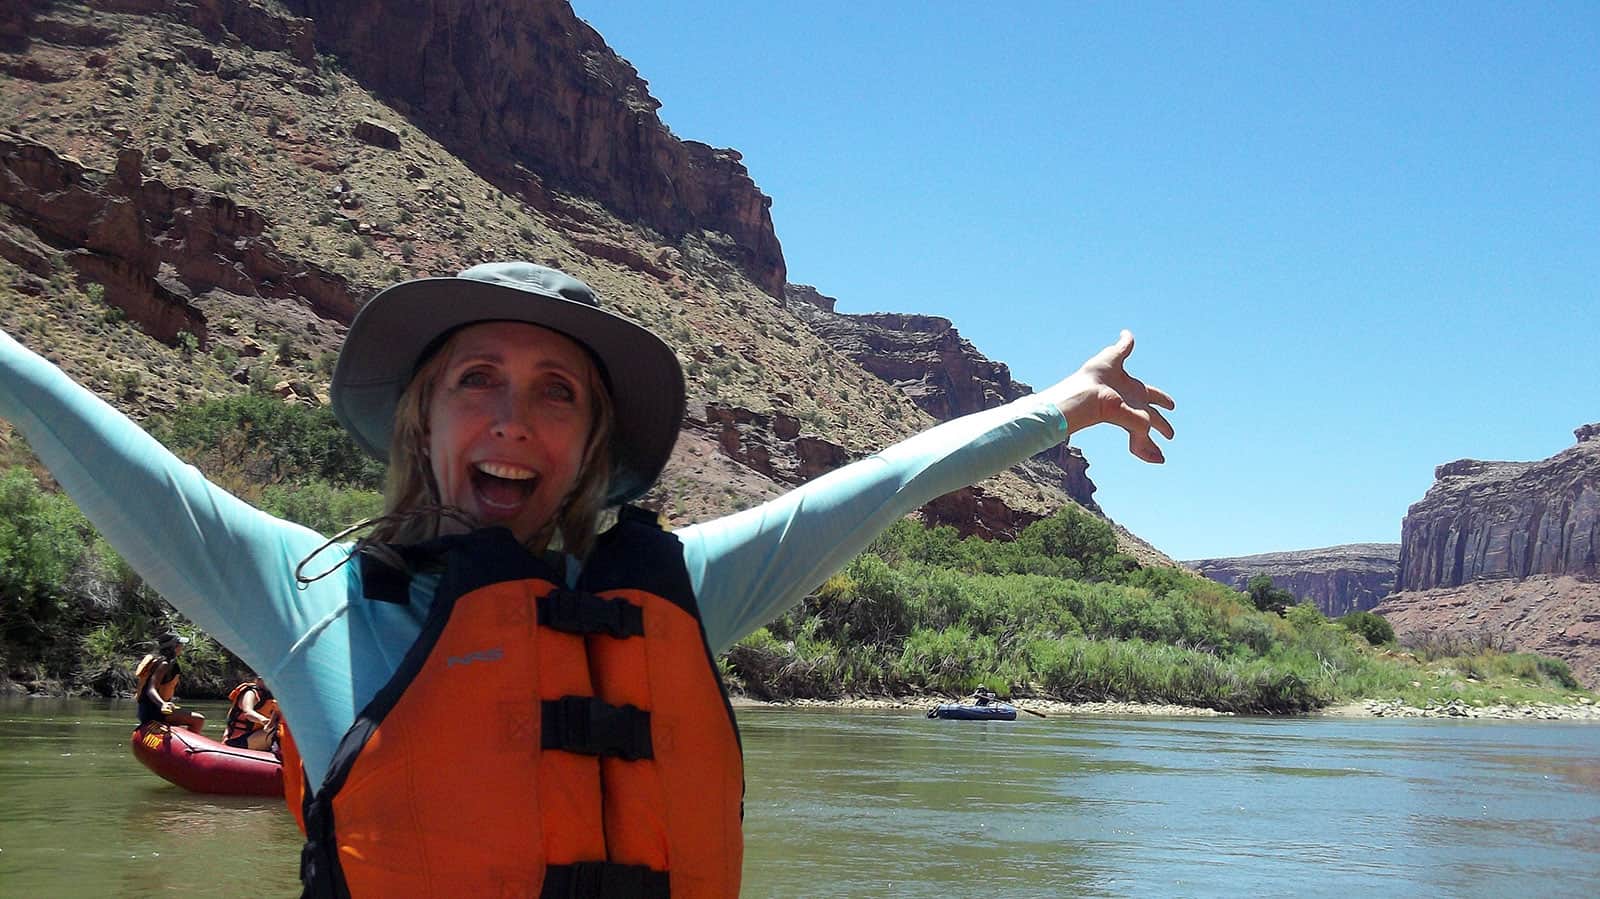 Teyla rafting on the Colorado